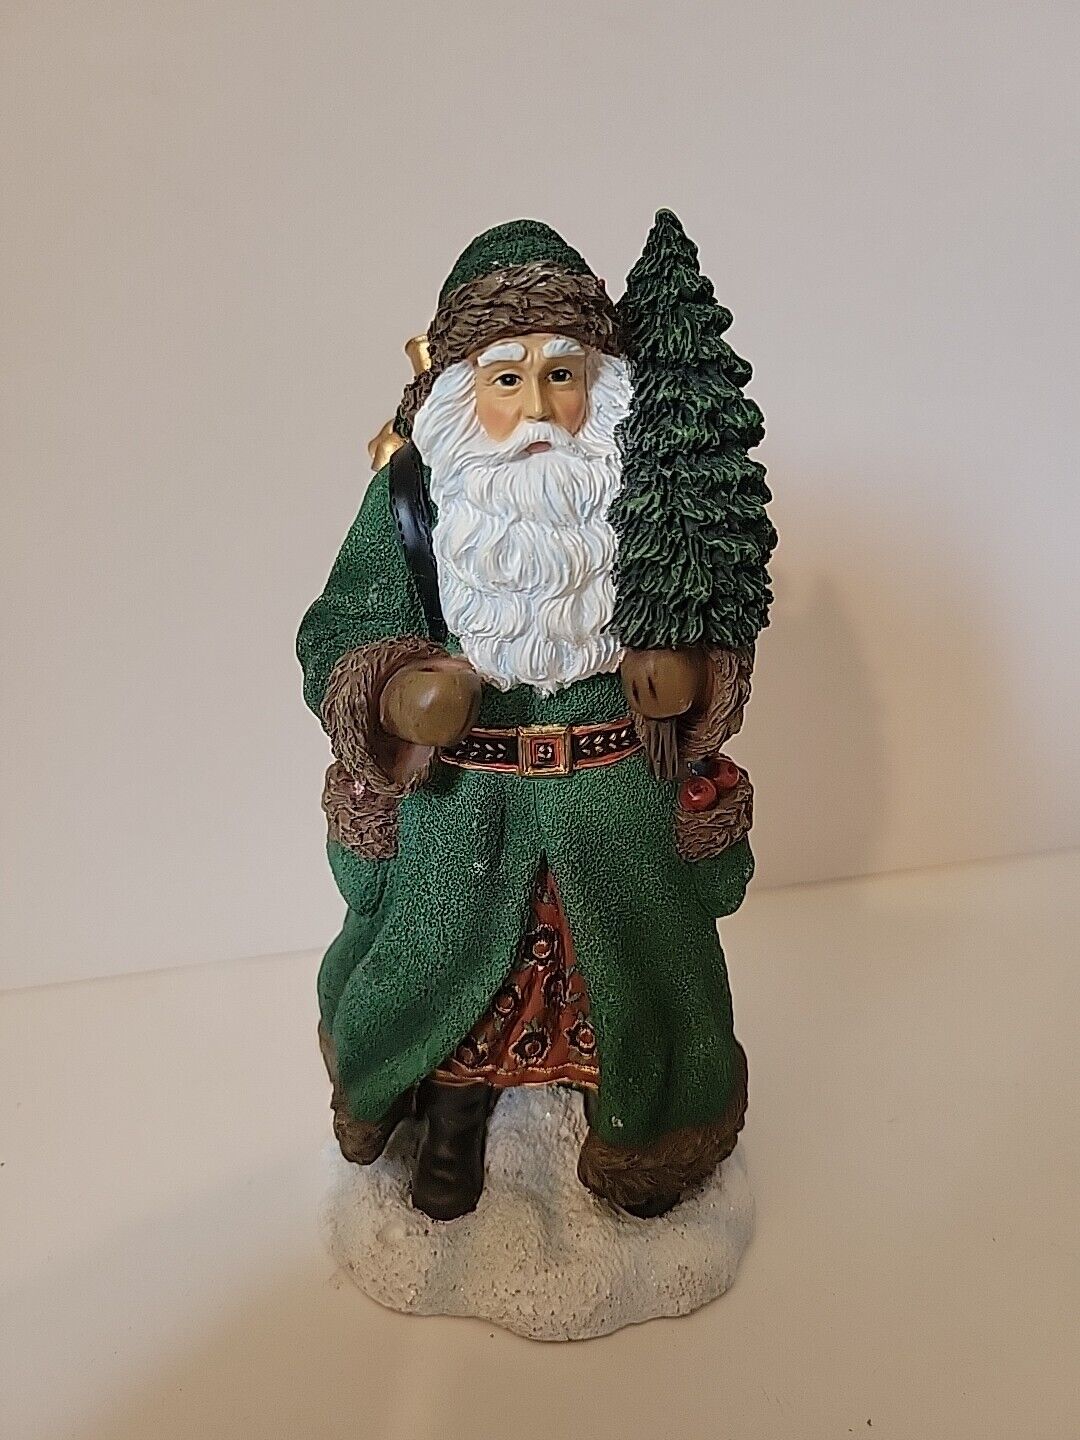 2000 Pipka Santa Memories Of Christmas “Old Father Christmas” Limited Edition